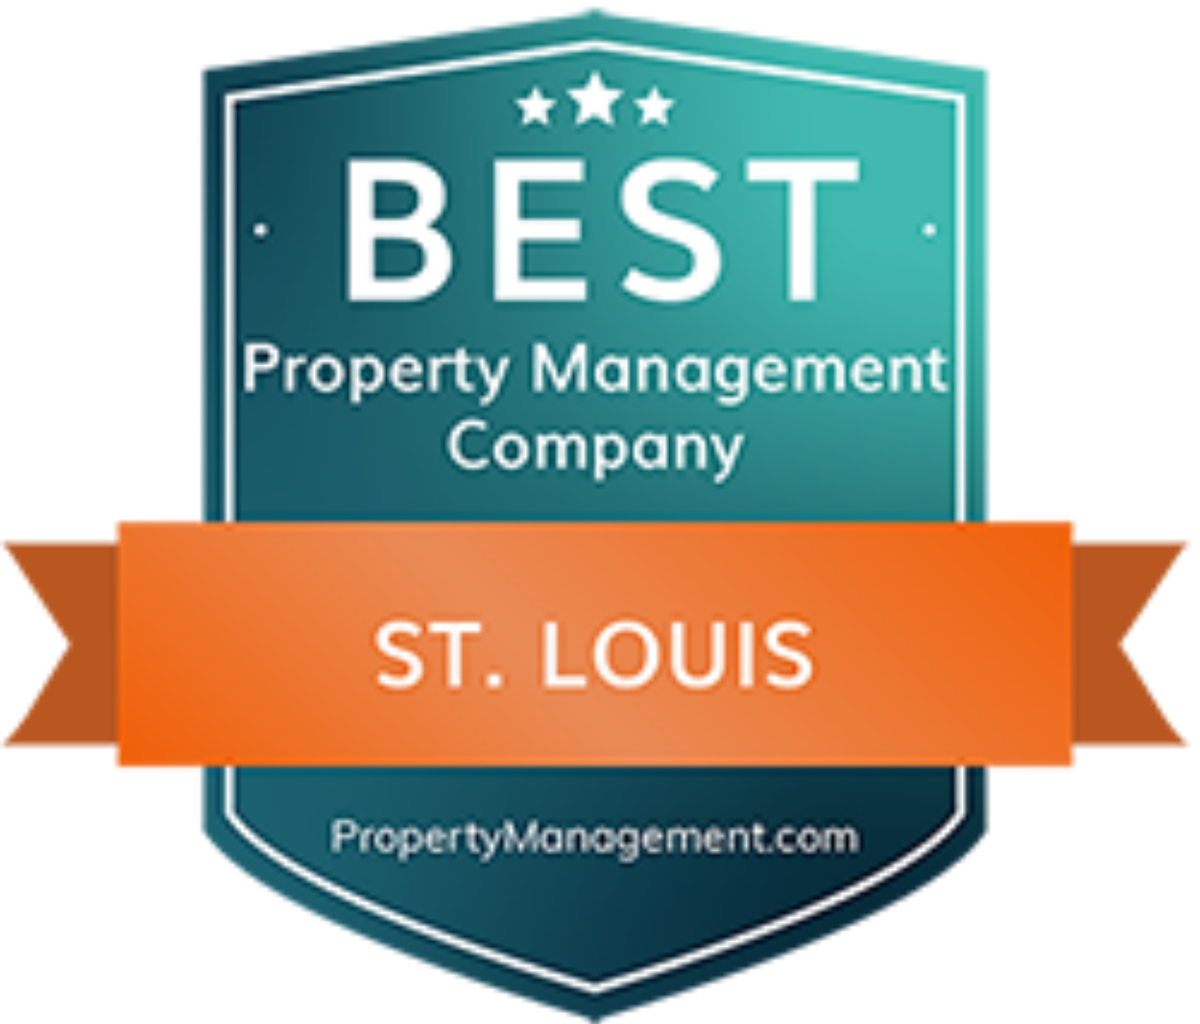 Best Property Management Company St. Louis Badge